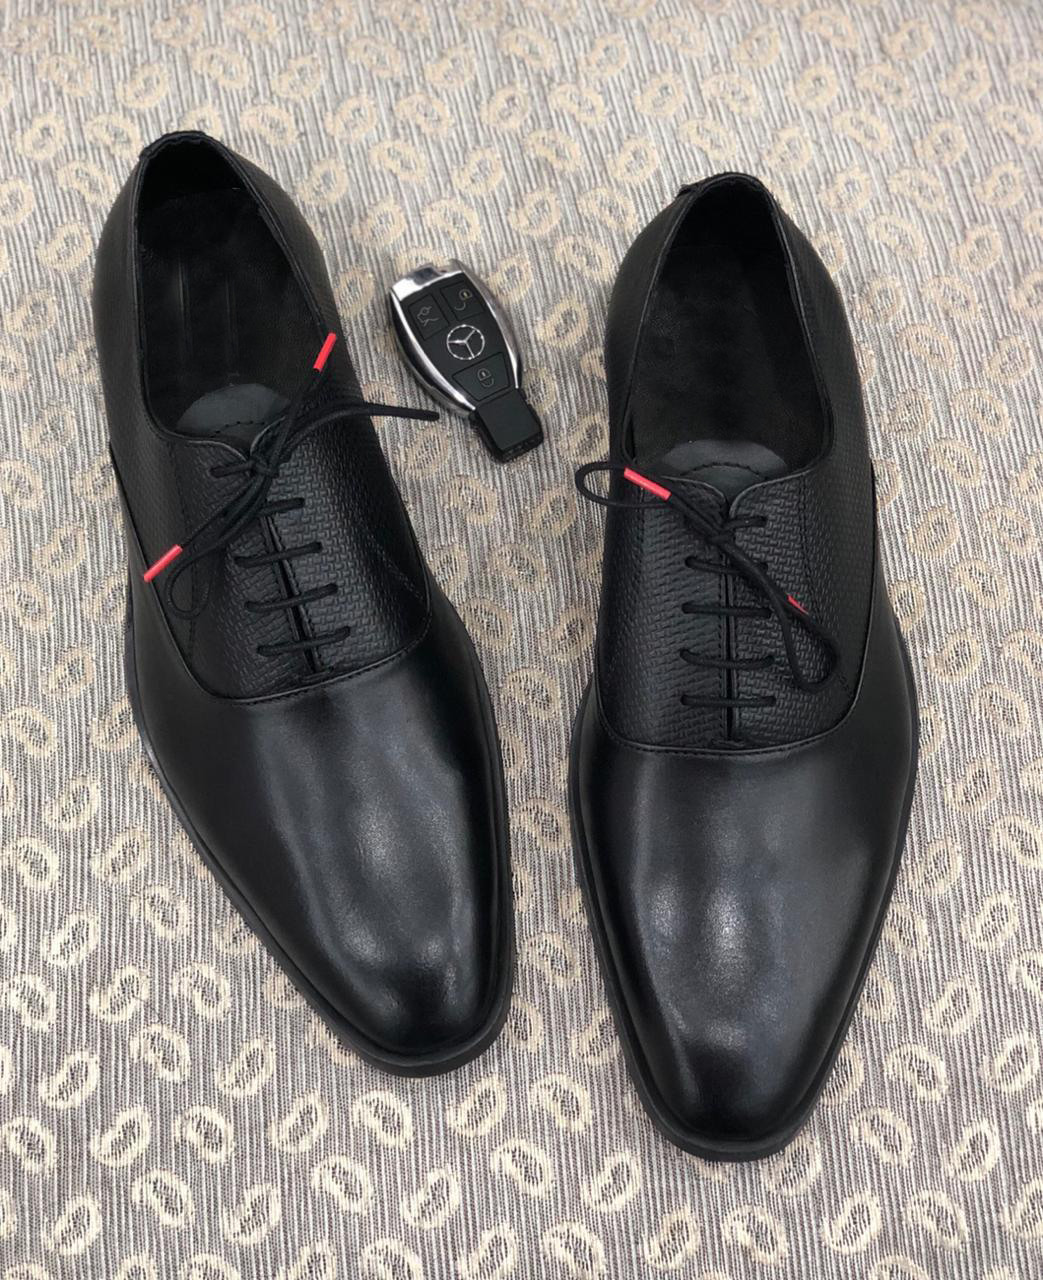 Classic Design Premium Quality Leather Formal Shoes For Men-Unique and Classy